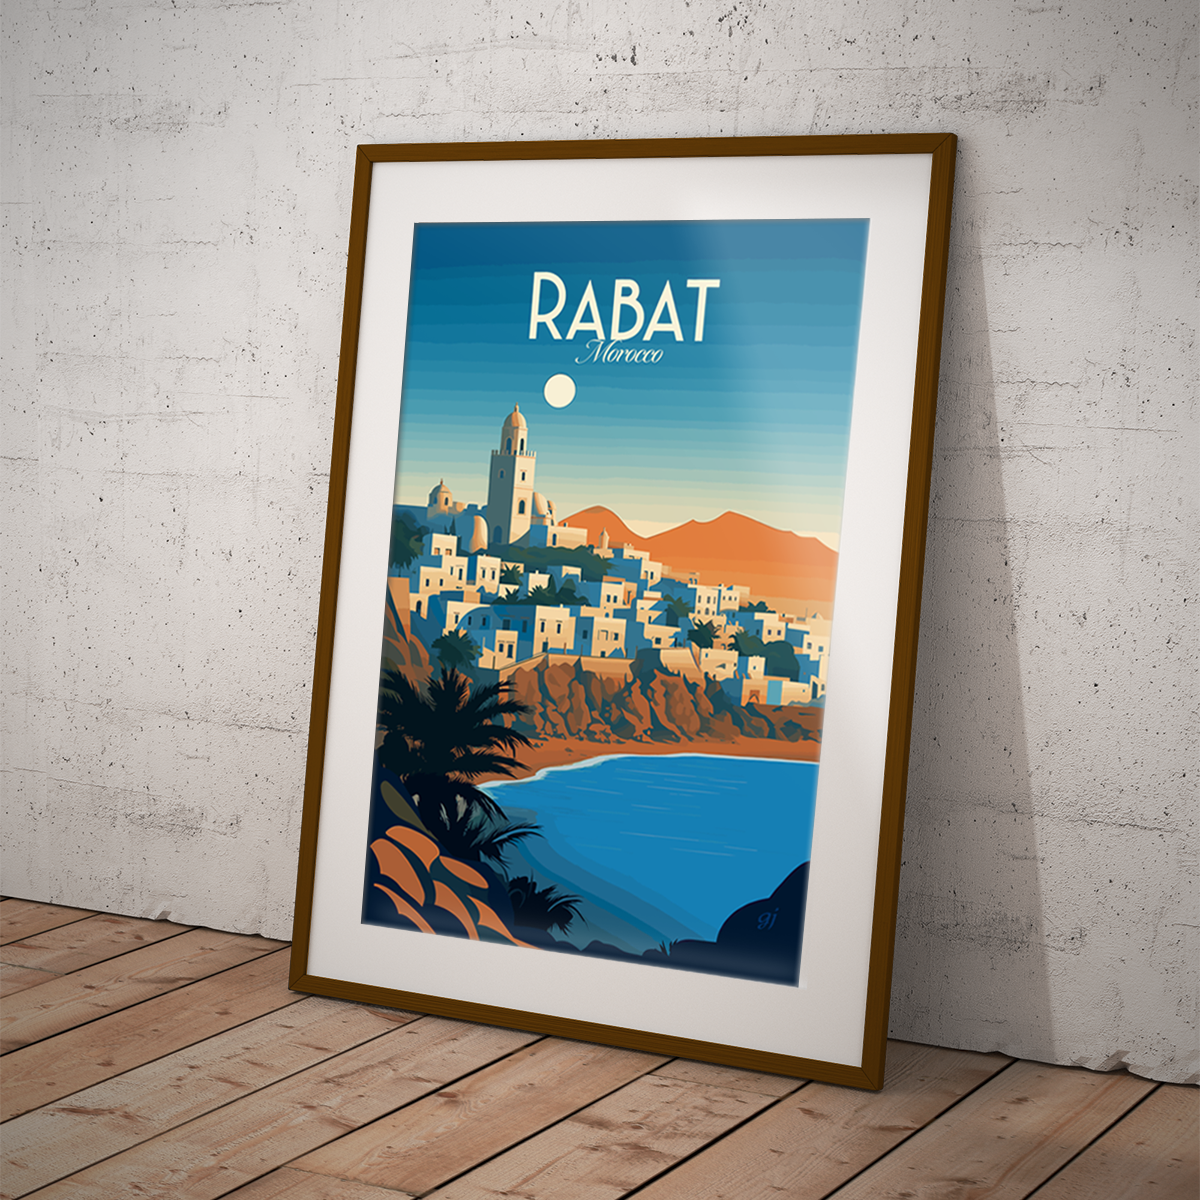 Rabat poster by bon voyage design